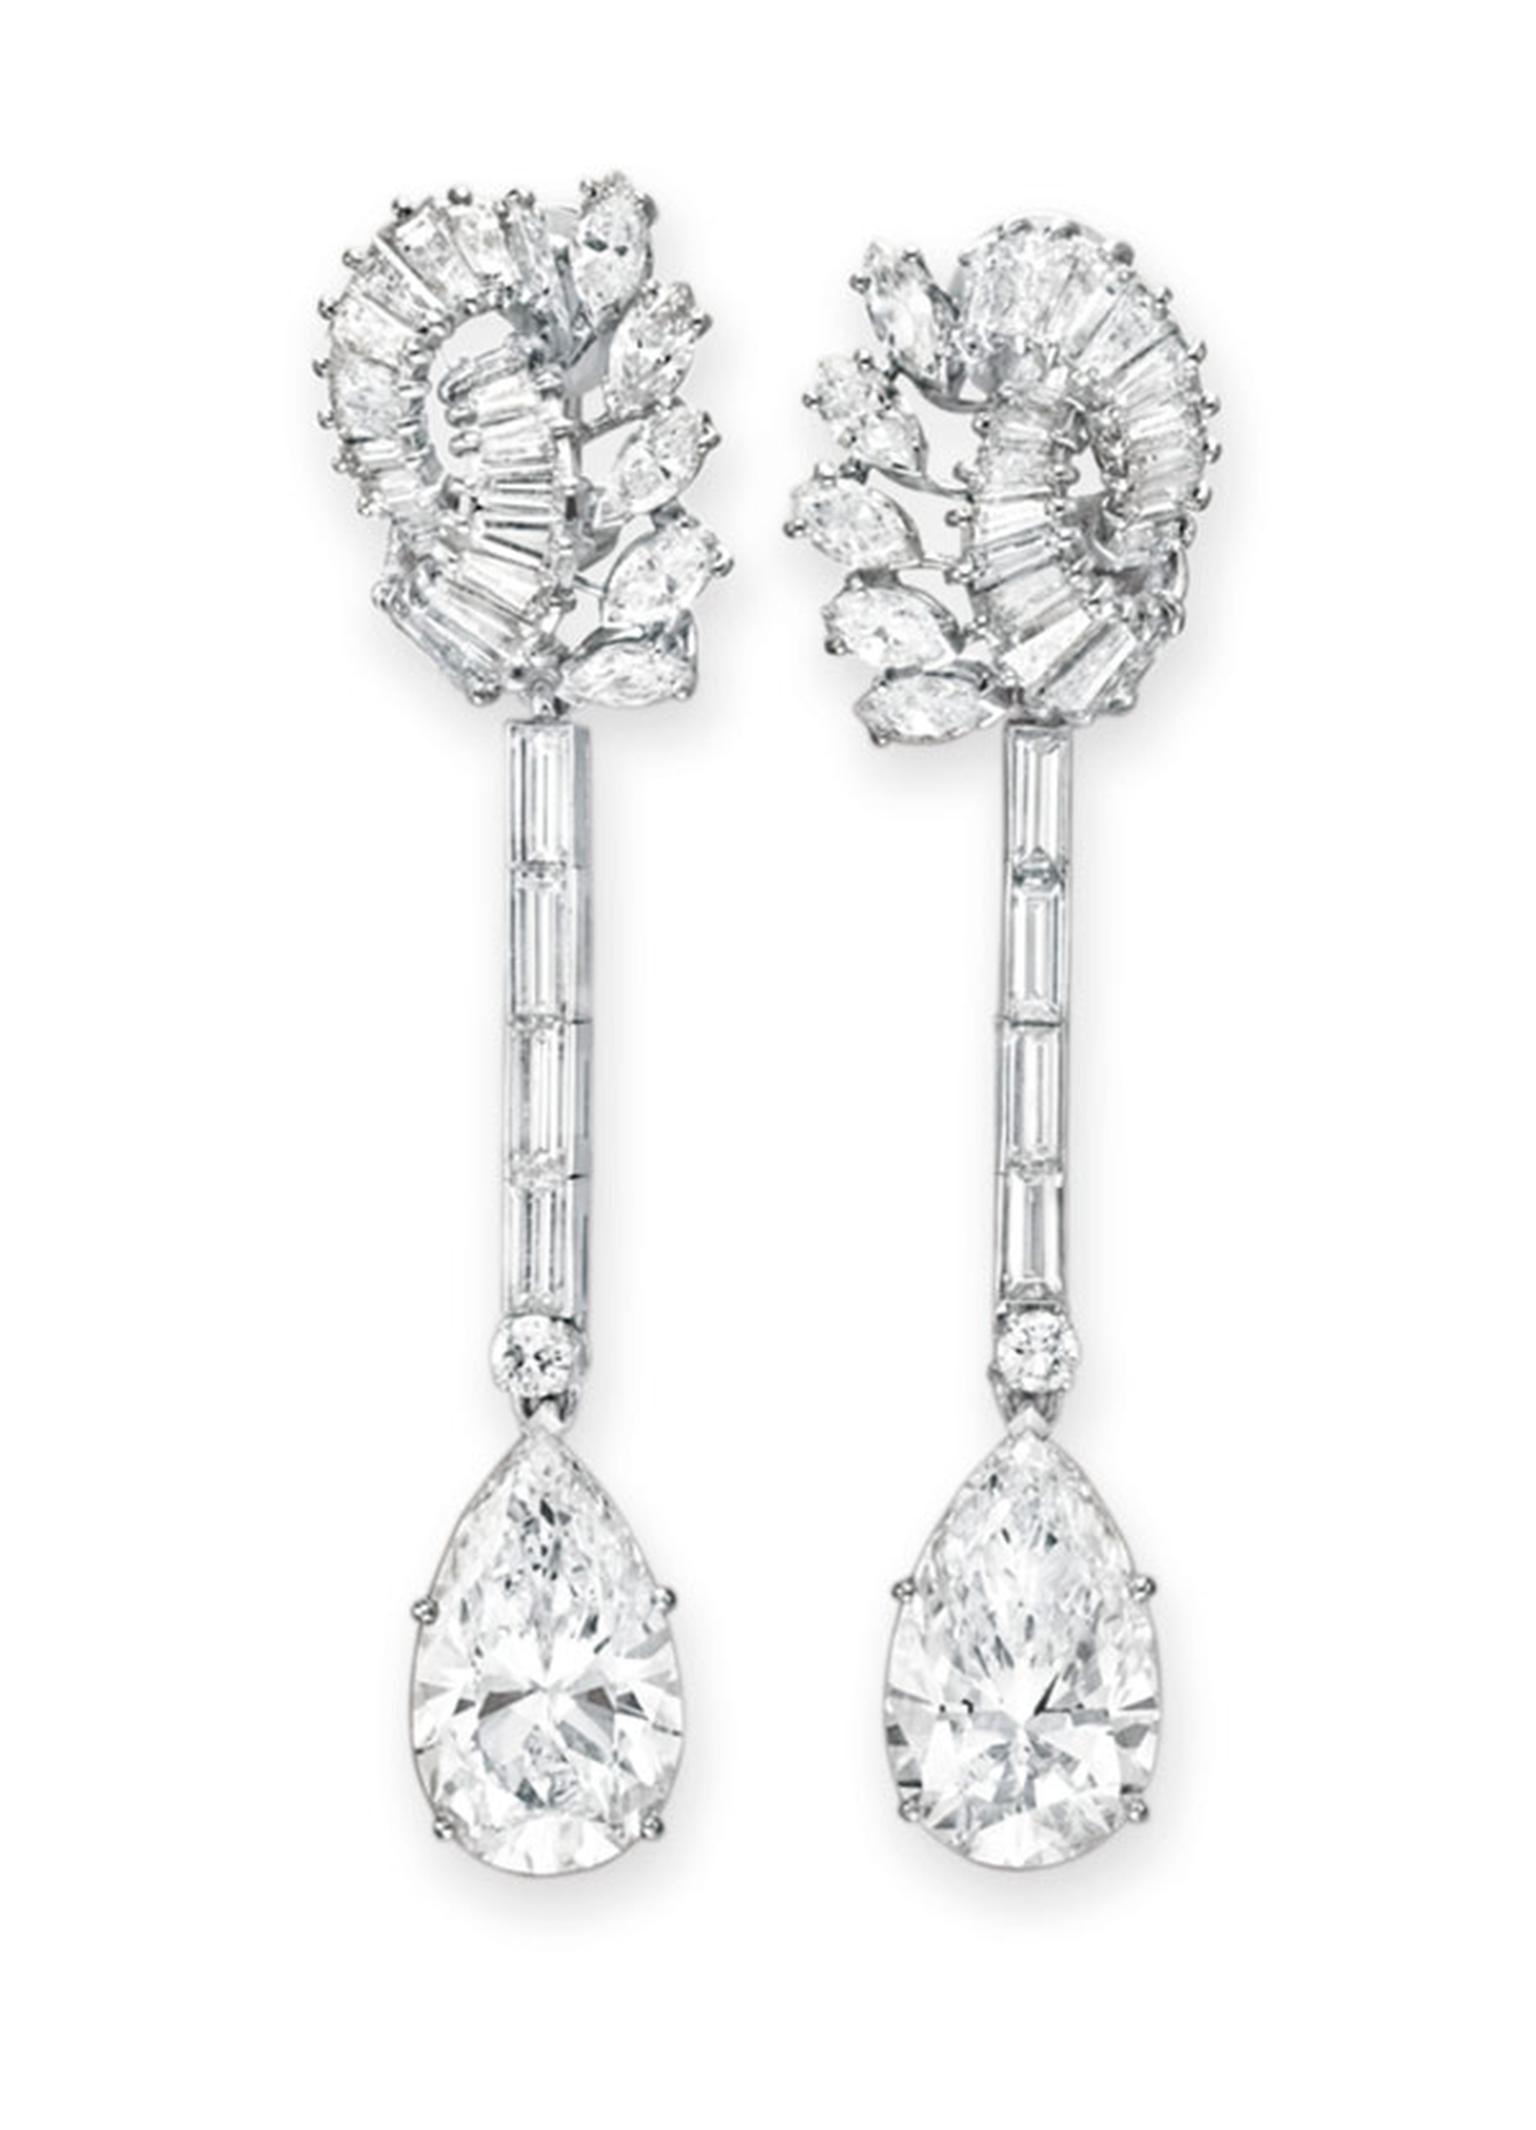 Christies-Pair-of-Pear-Shaped-Diamond-Ear-Pendants